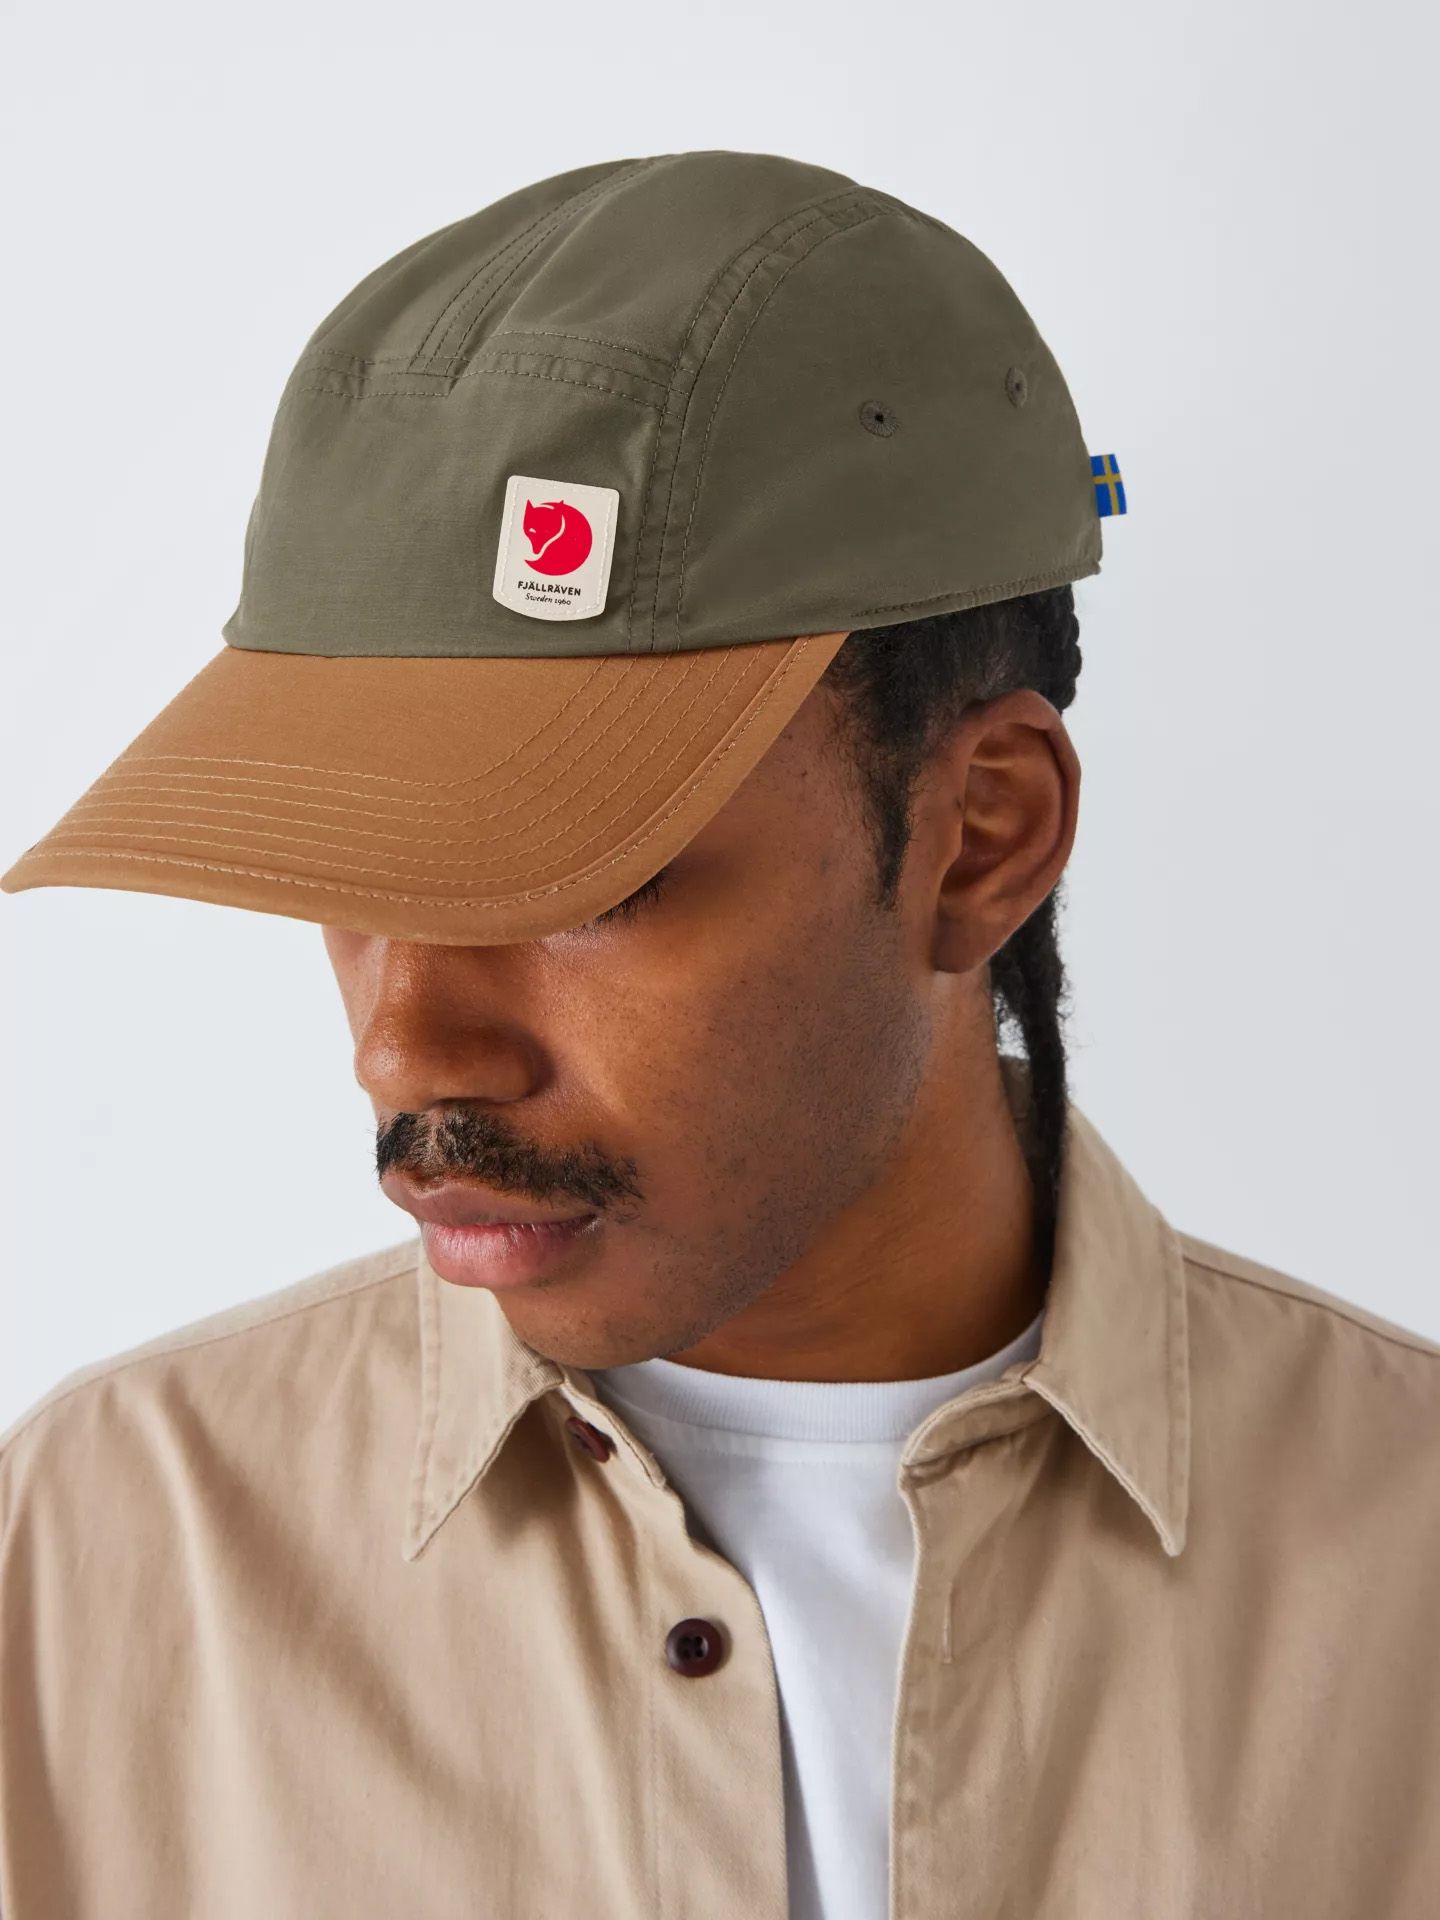 Man wearing a khaki Fjallraven cap